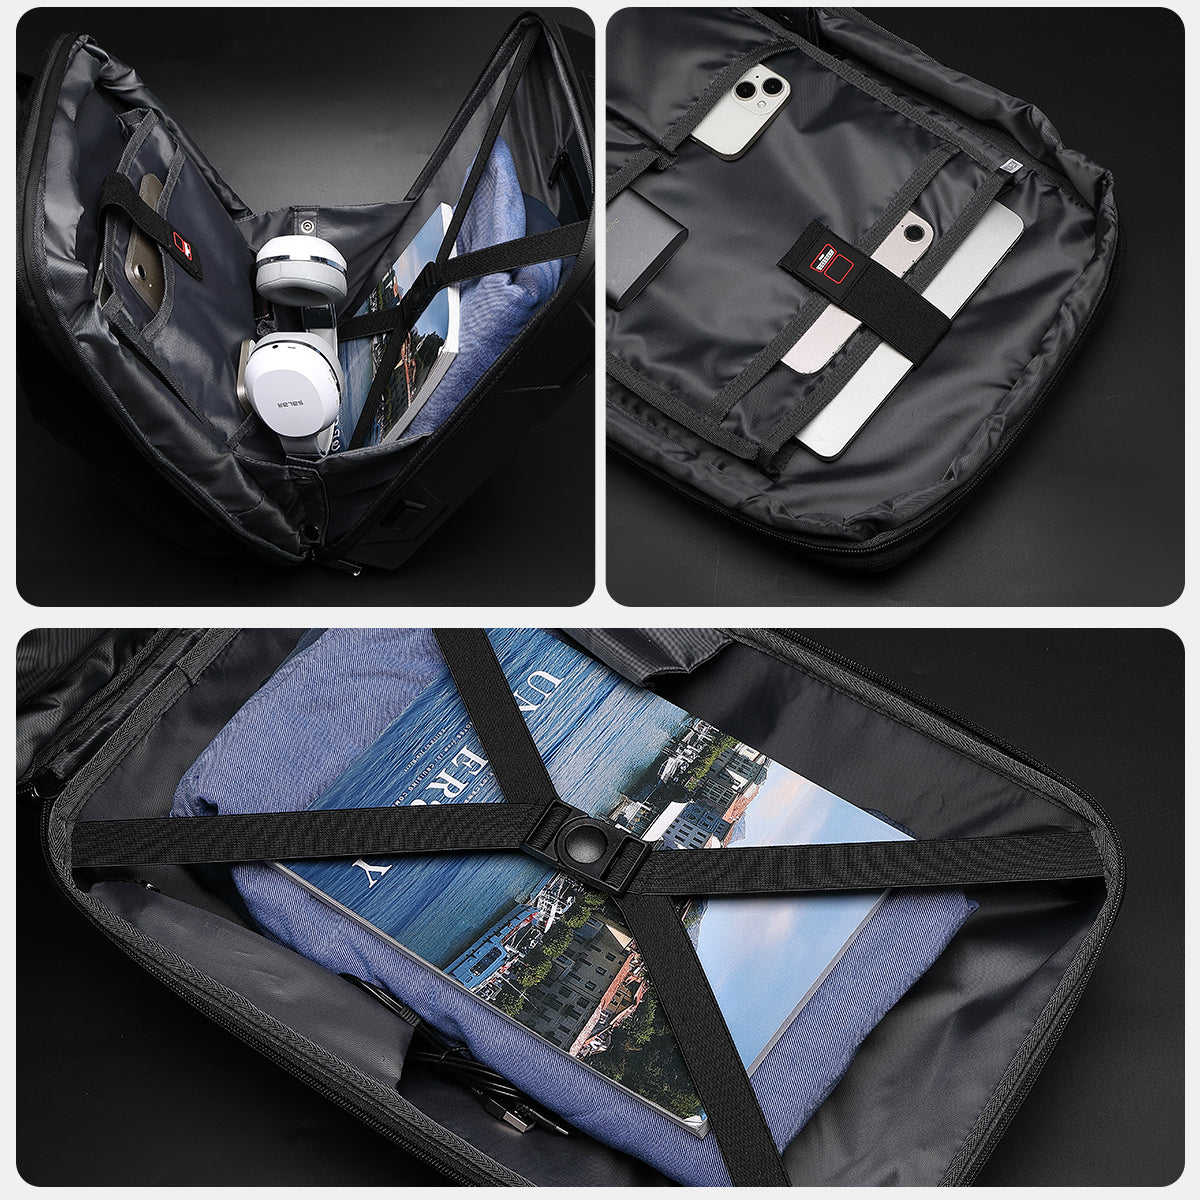 Cyber​​backpack 可擴展且功能齊全的筆記型電腦包，適合商務、遊戲和旅行 – 耐用、時尚、安全，配備 USB 充電端口